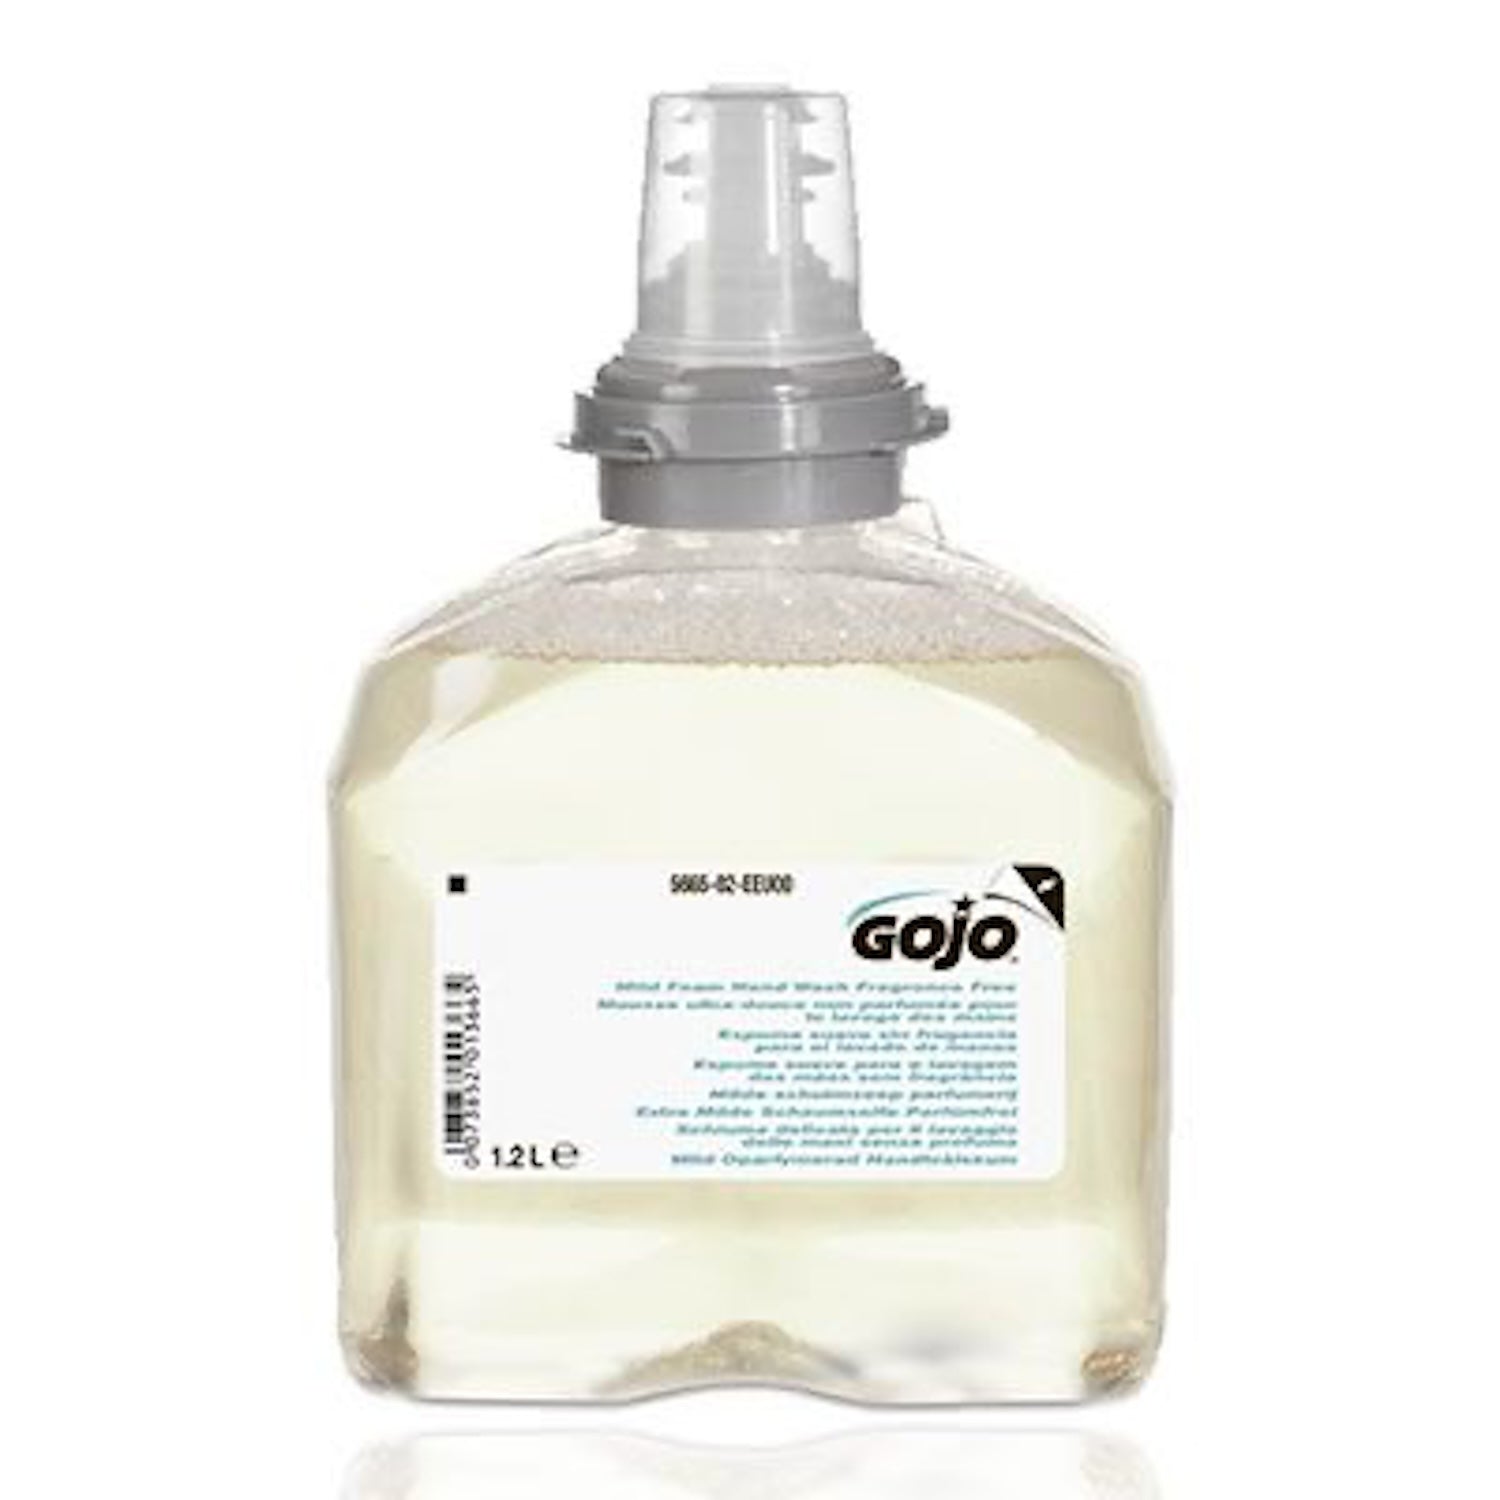 GOJO Mild Foam Hand Wash Refill | Fragrance Free | 1200ml